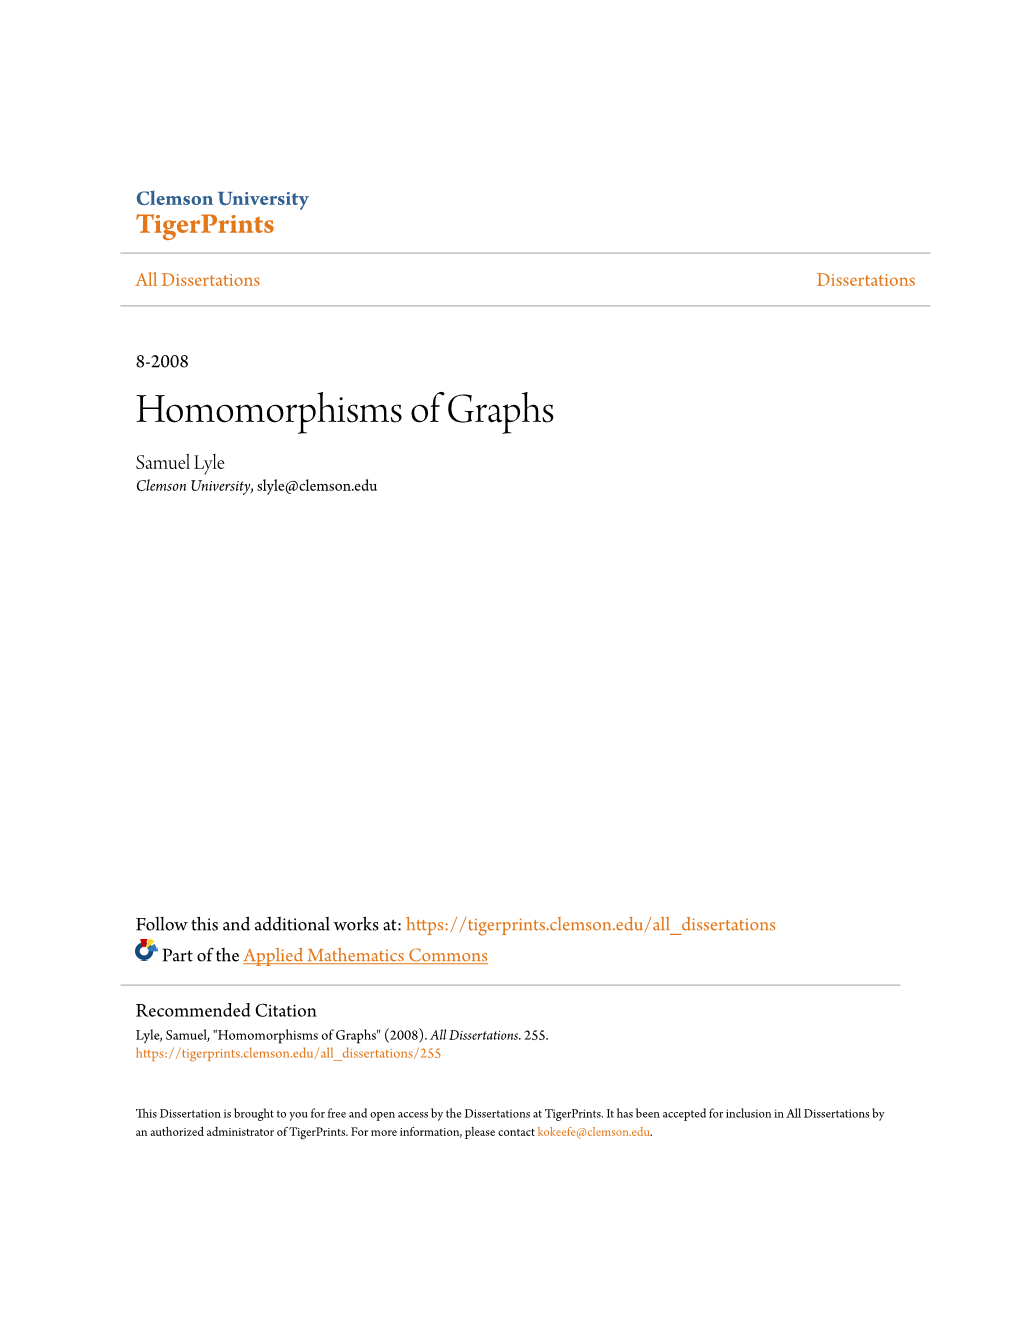 Homomorphisms of Graphs Samuel Lyle Clemson University, Slyle@Clemson.Edu